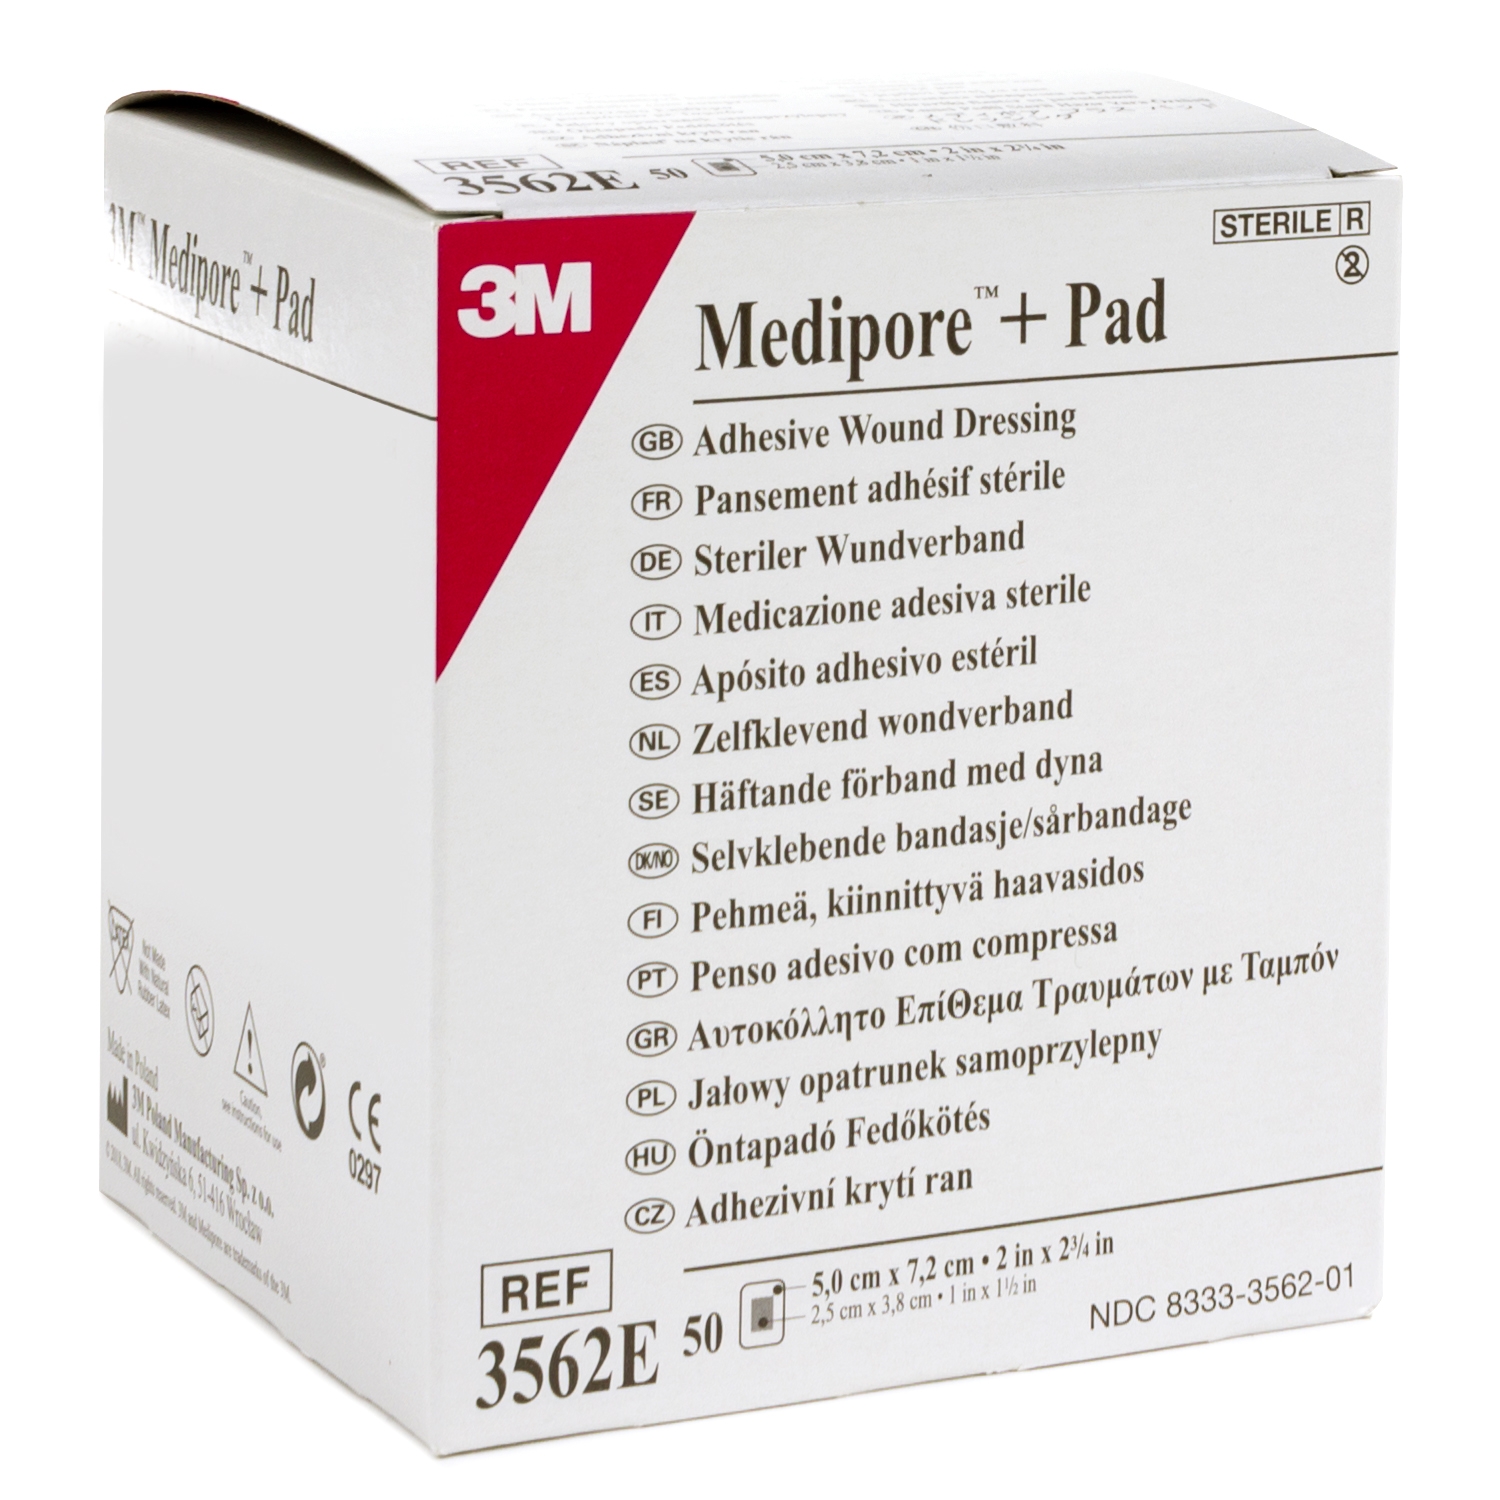 Medipore + pad - 5 x 7 cm (50 pcs)